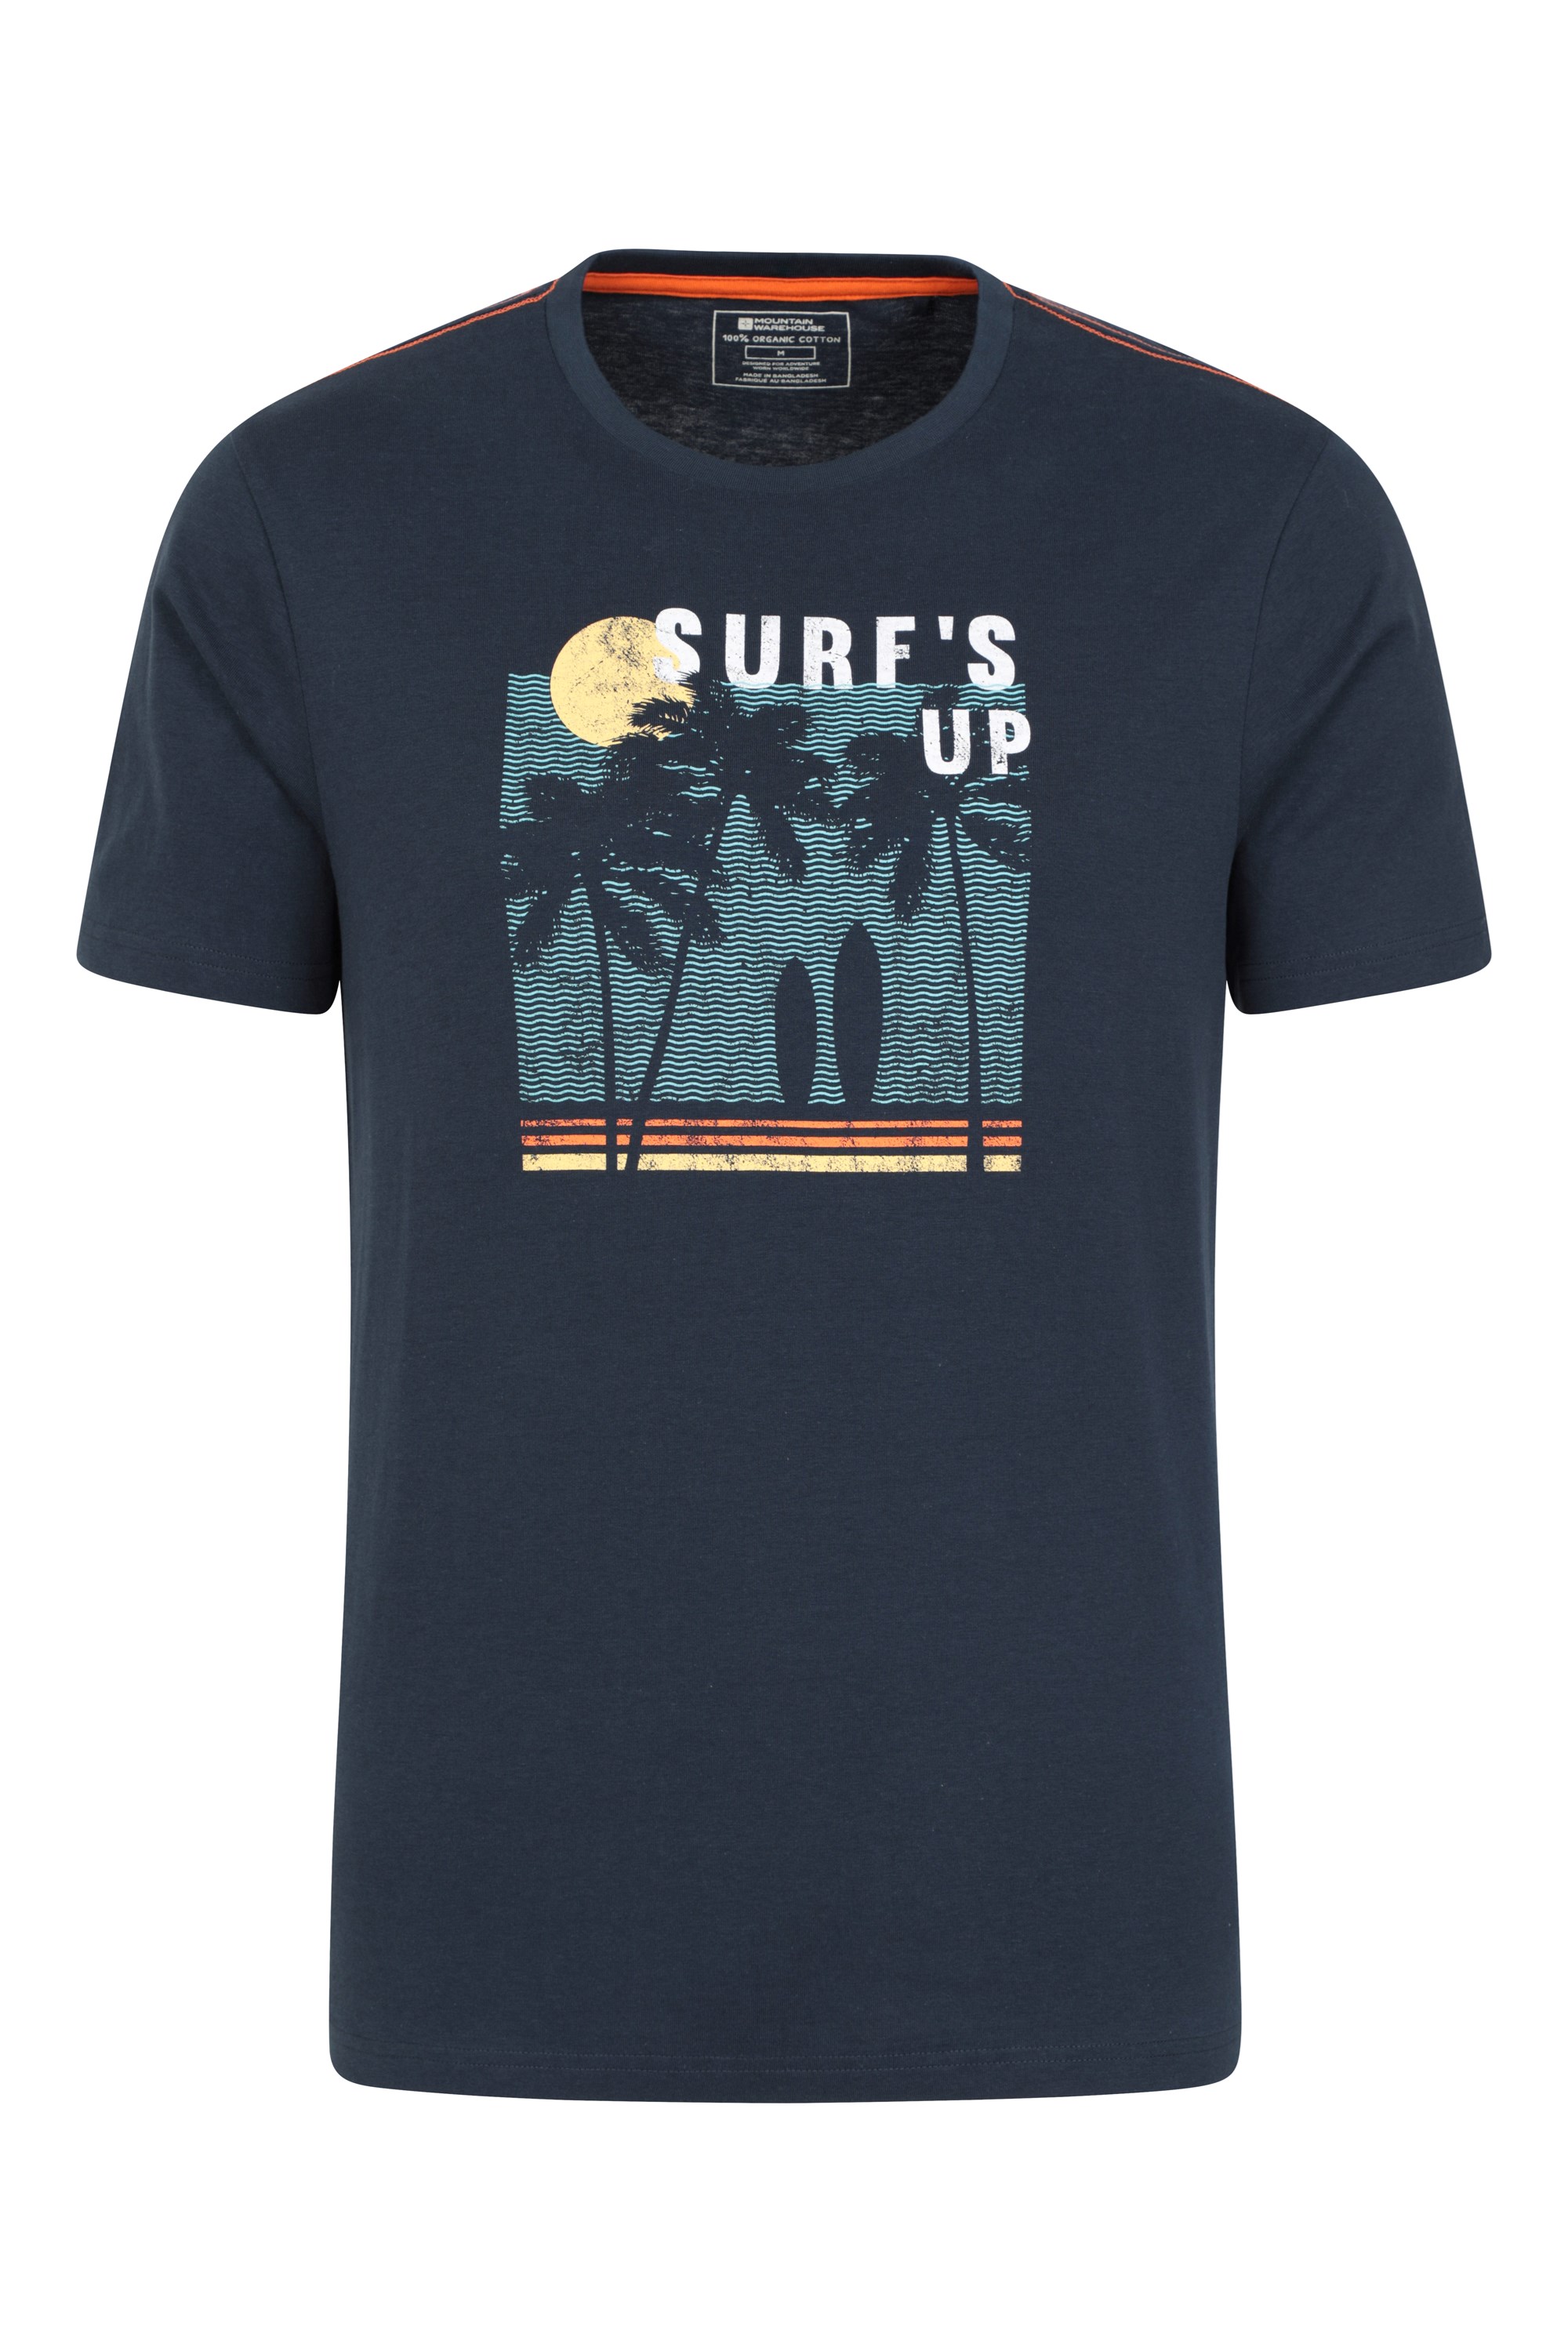 Surfs Up Mens Organic T-shirt - Navy